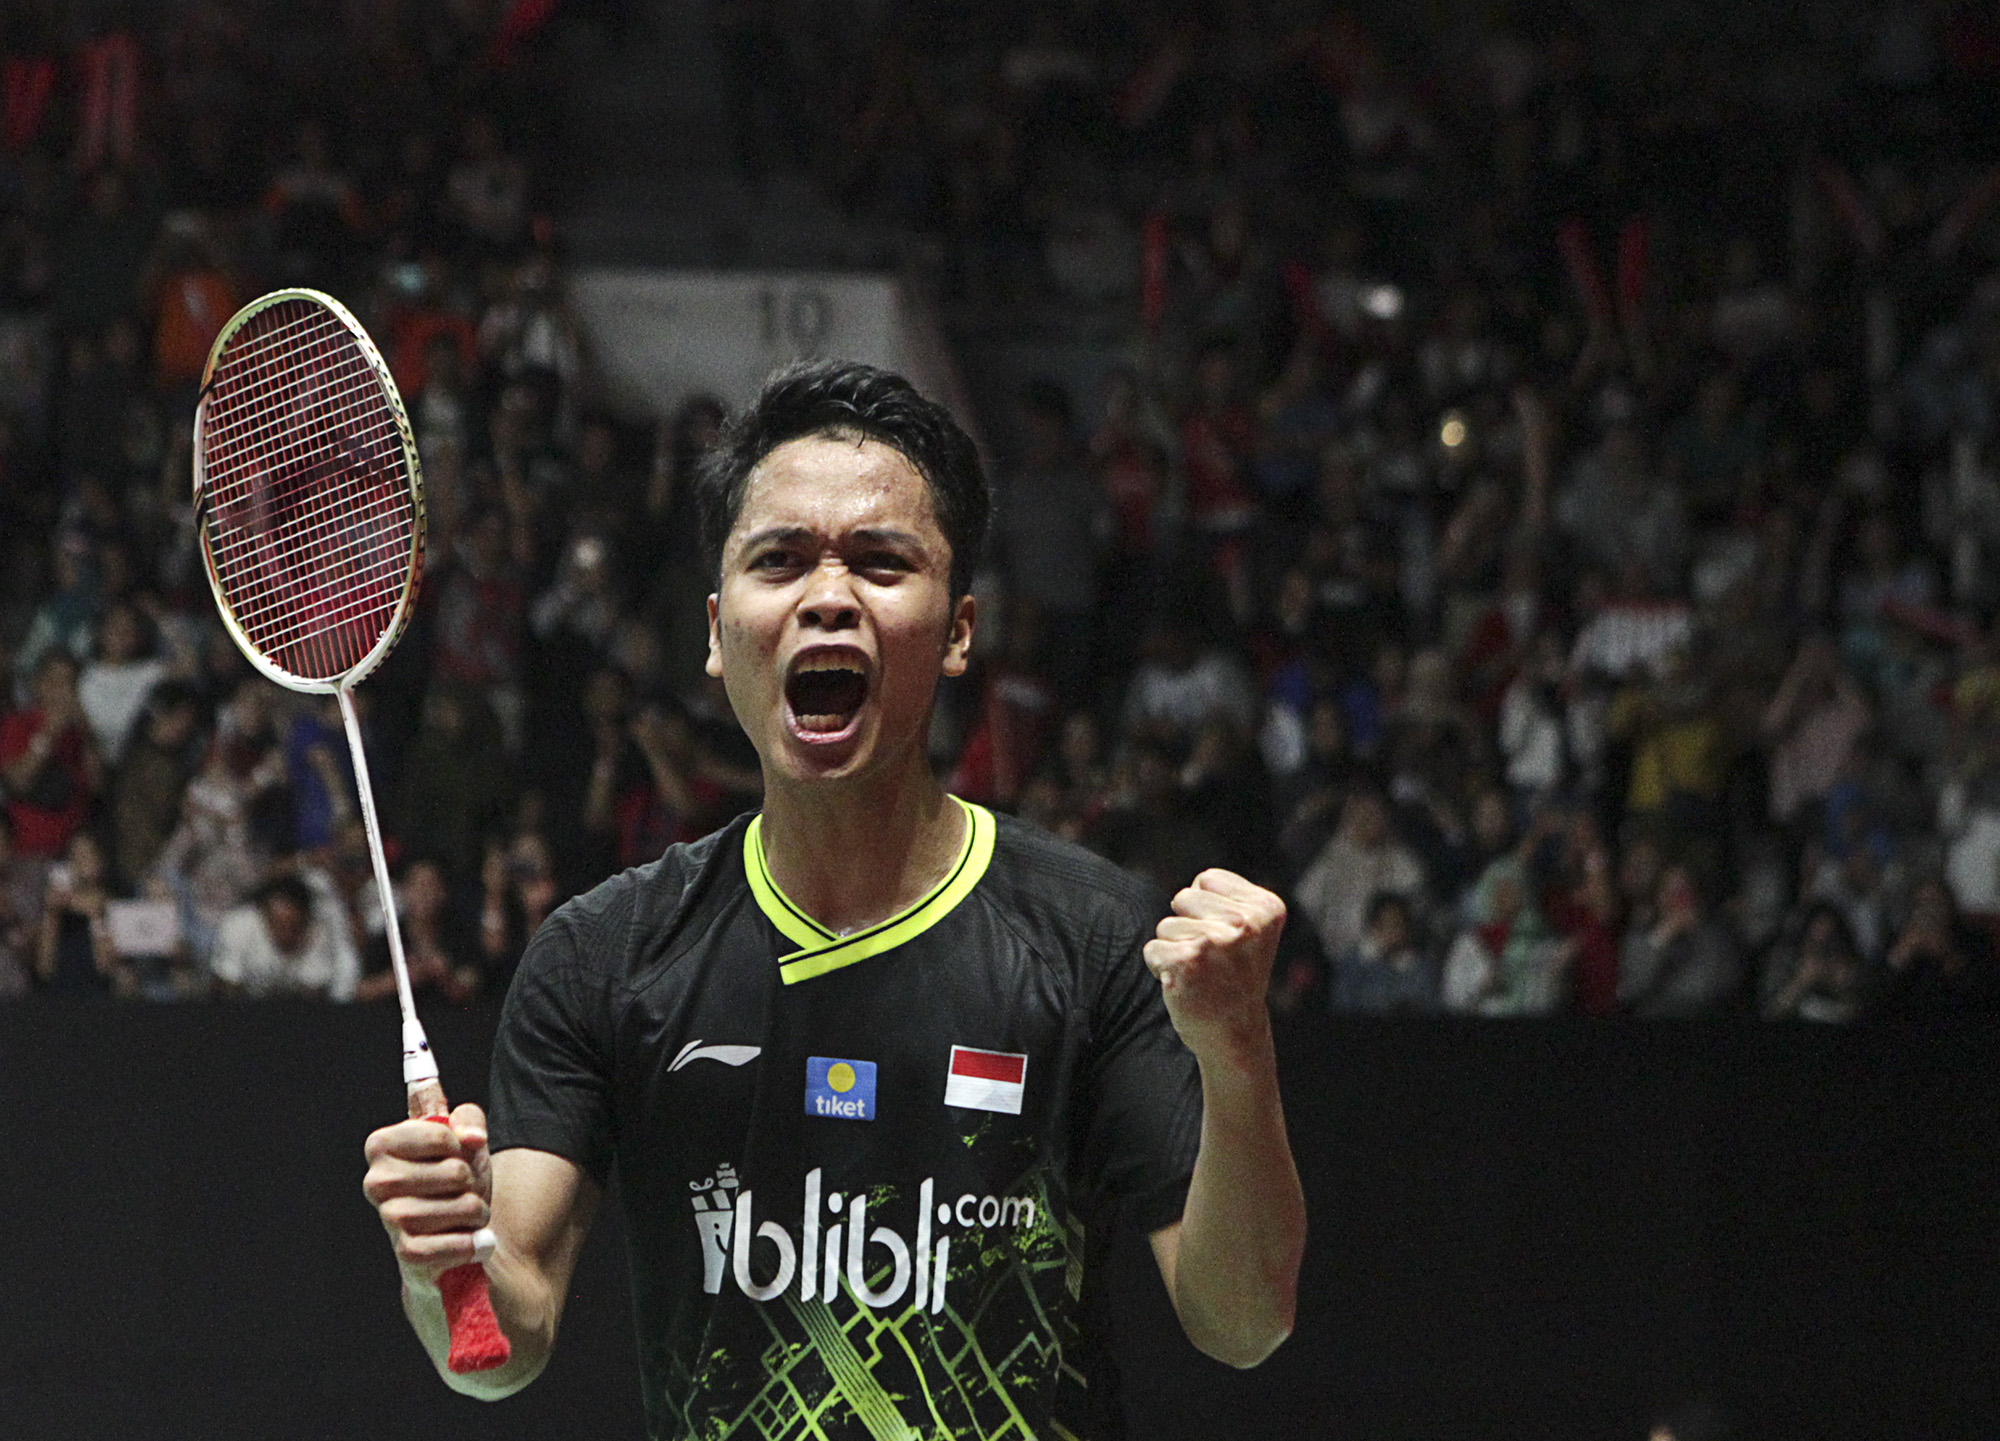 Gelar Indonesia Masters 2020 Bukti Anthony Ginting Pemain Berkualitas